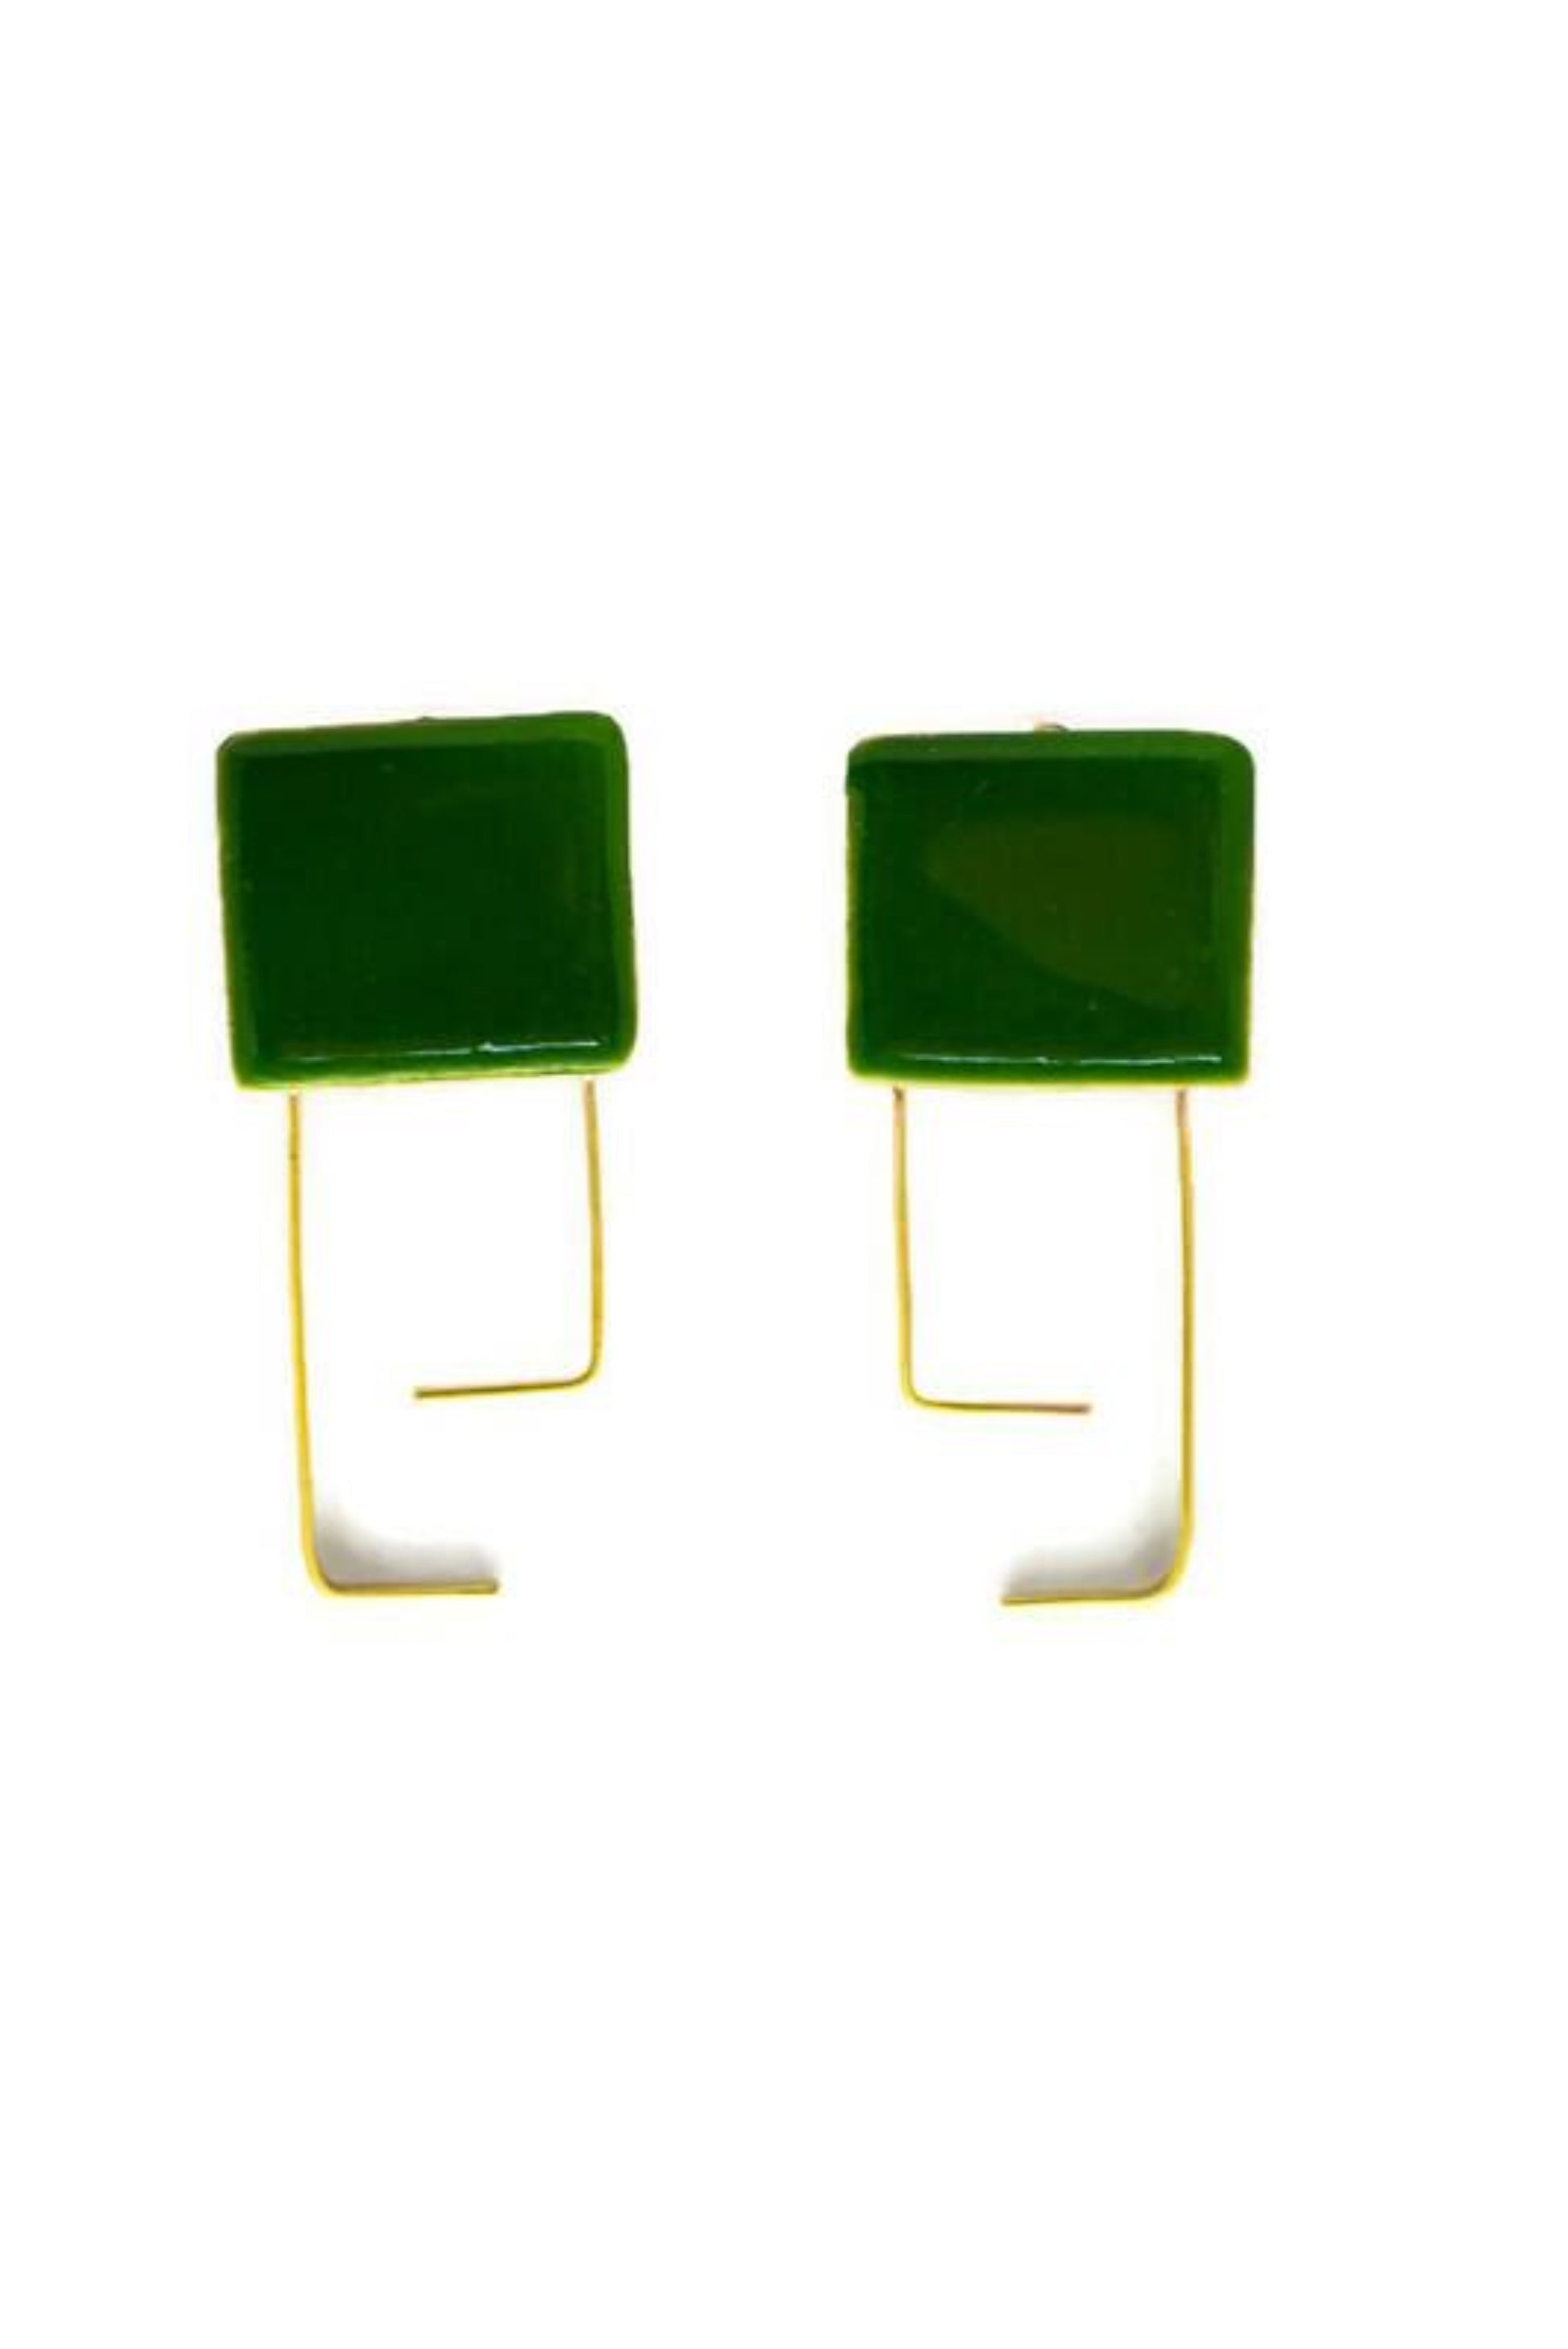 Brass earrings with resin | Vertical Hug Earrings - CURIUDO